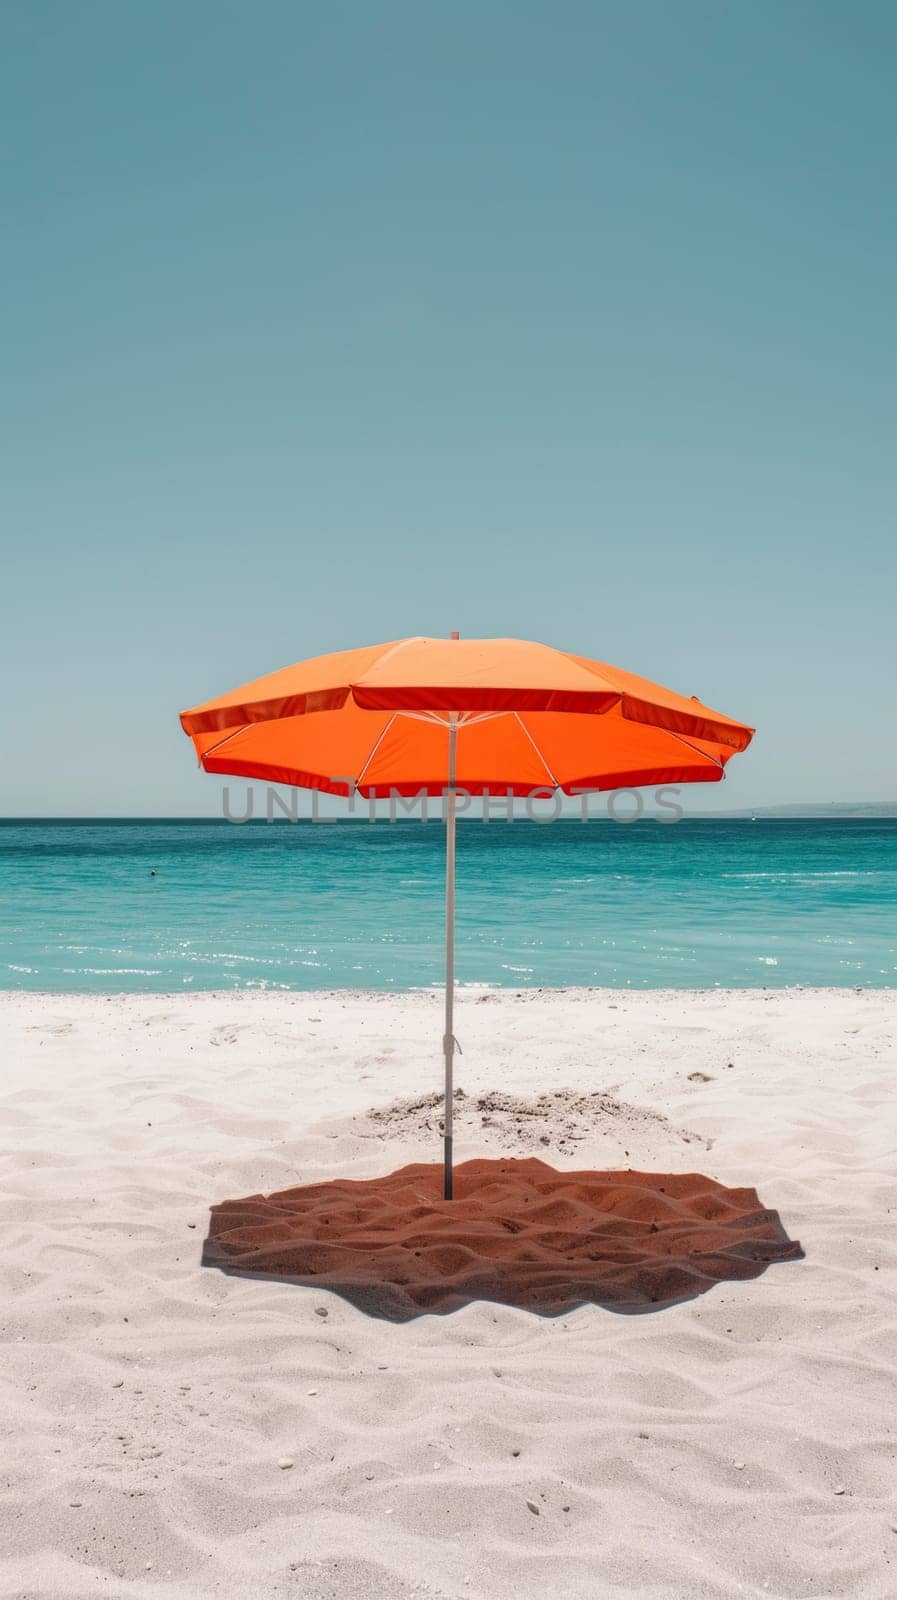 A large orange umbrella on a sandy beach near the ocean